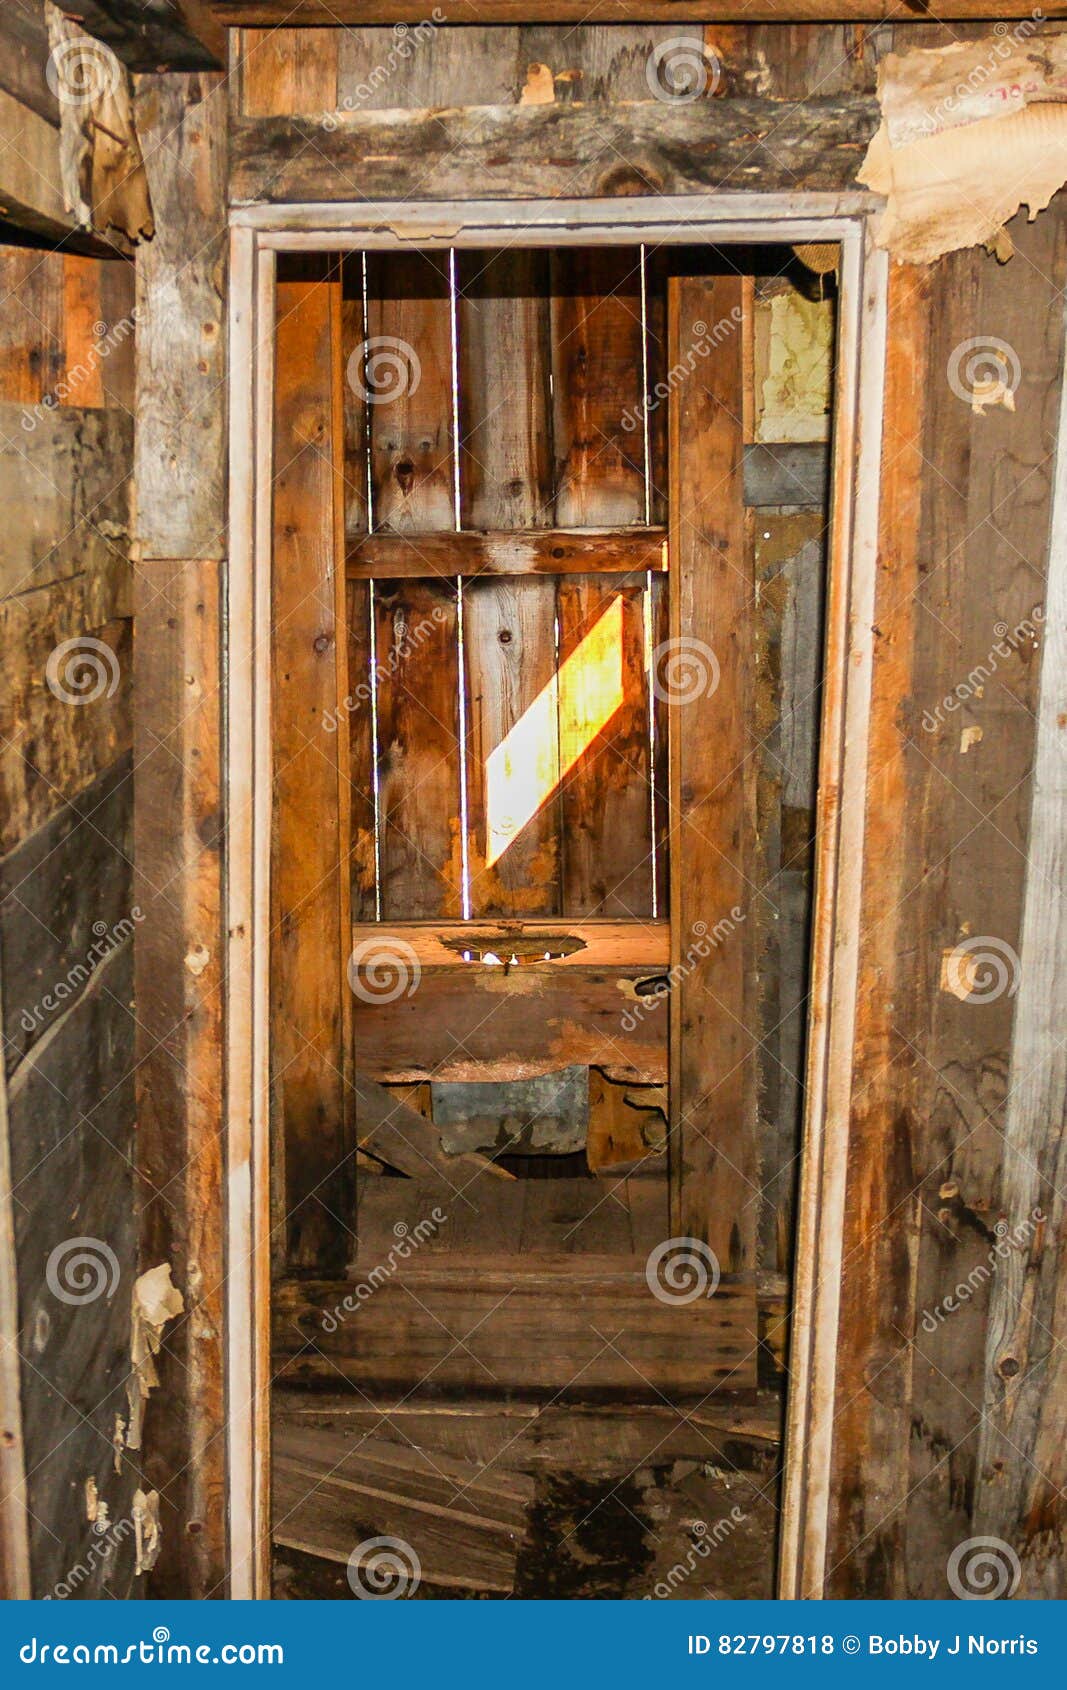 first-indoor-toilet-in-colorado-stock-photo-image-of-indoor-gold